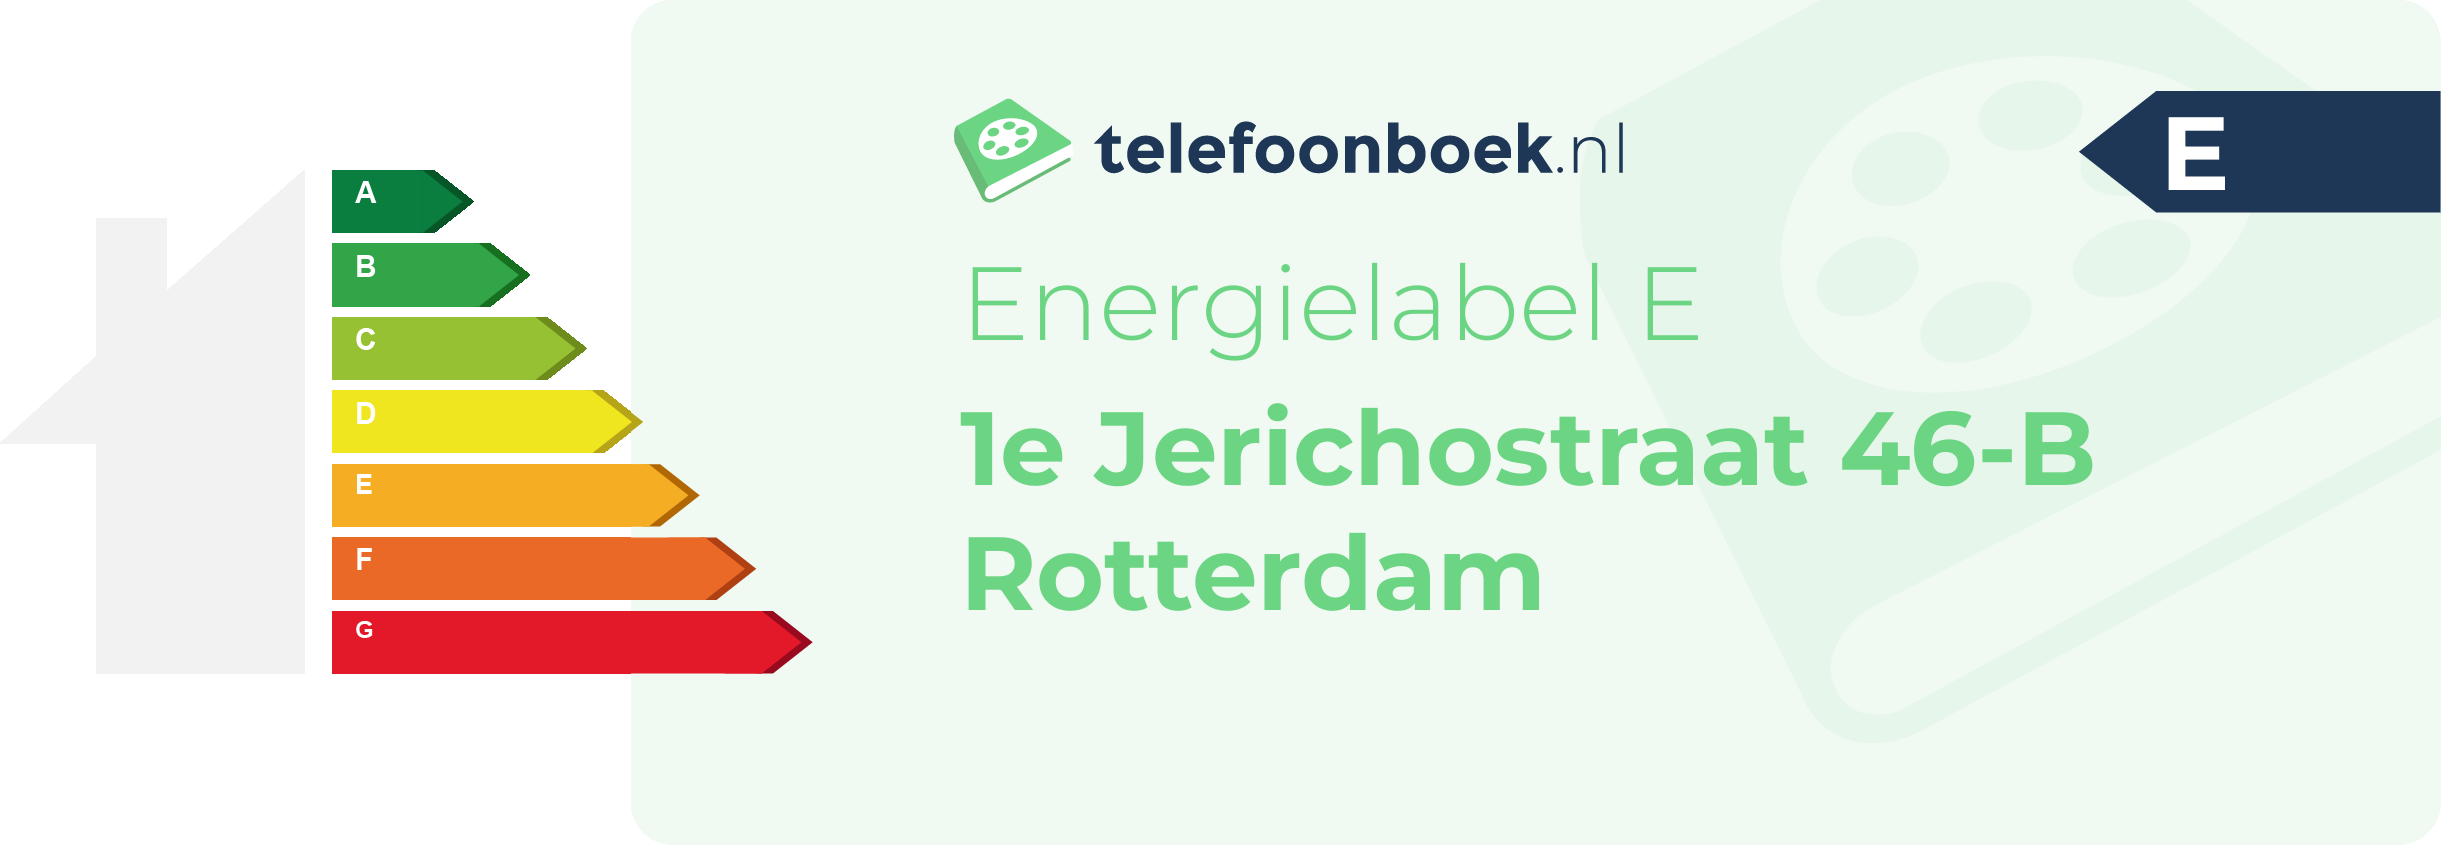 Energielabel 1e Jerichostraat 46-B Rotterdam